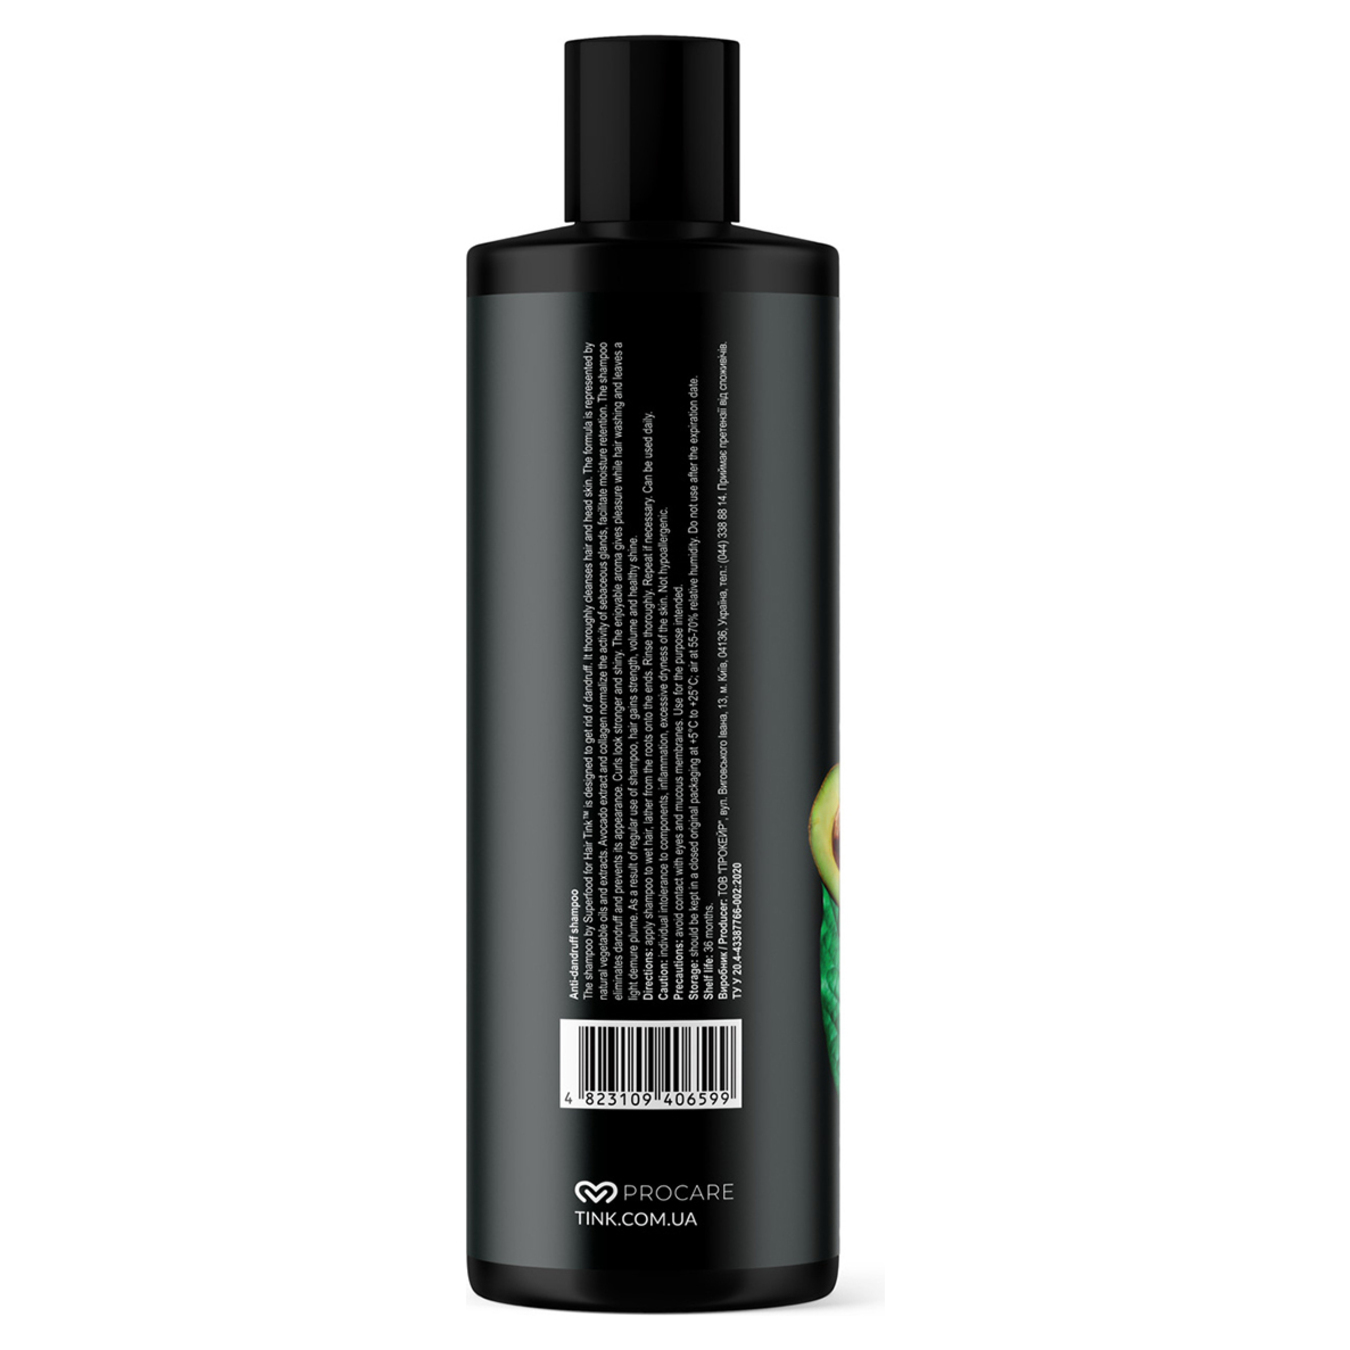 Shampoo Tink Avocado collagen against dandruff 500ml 3